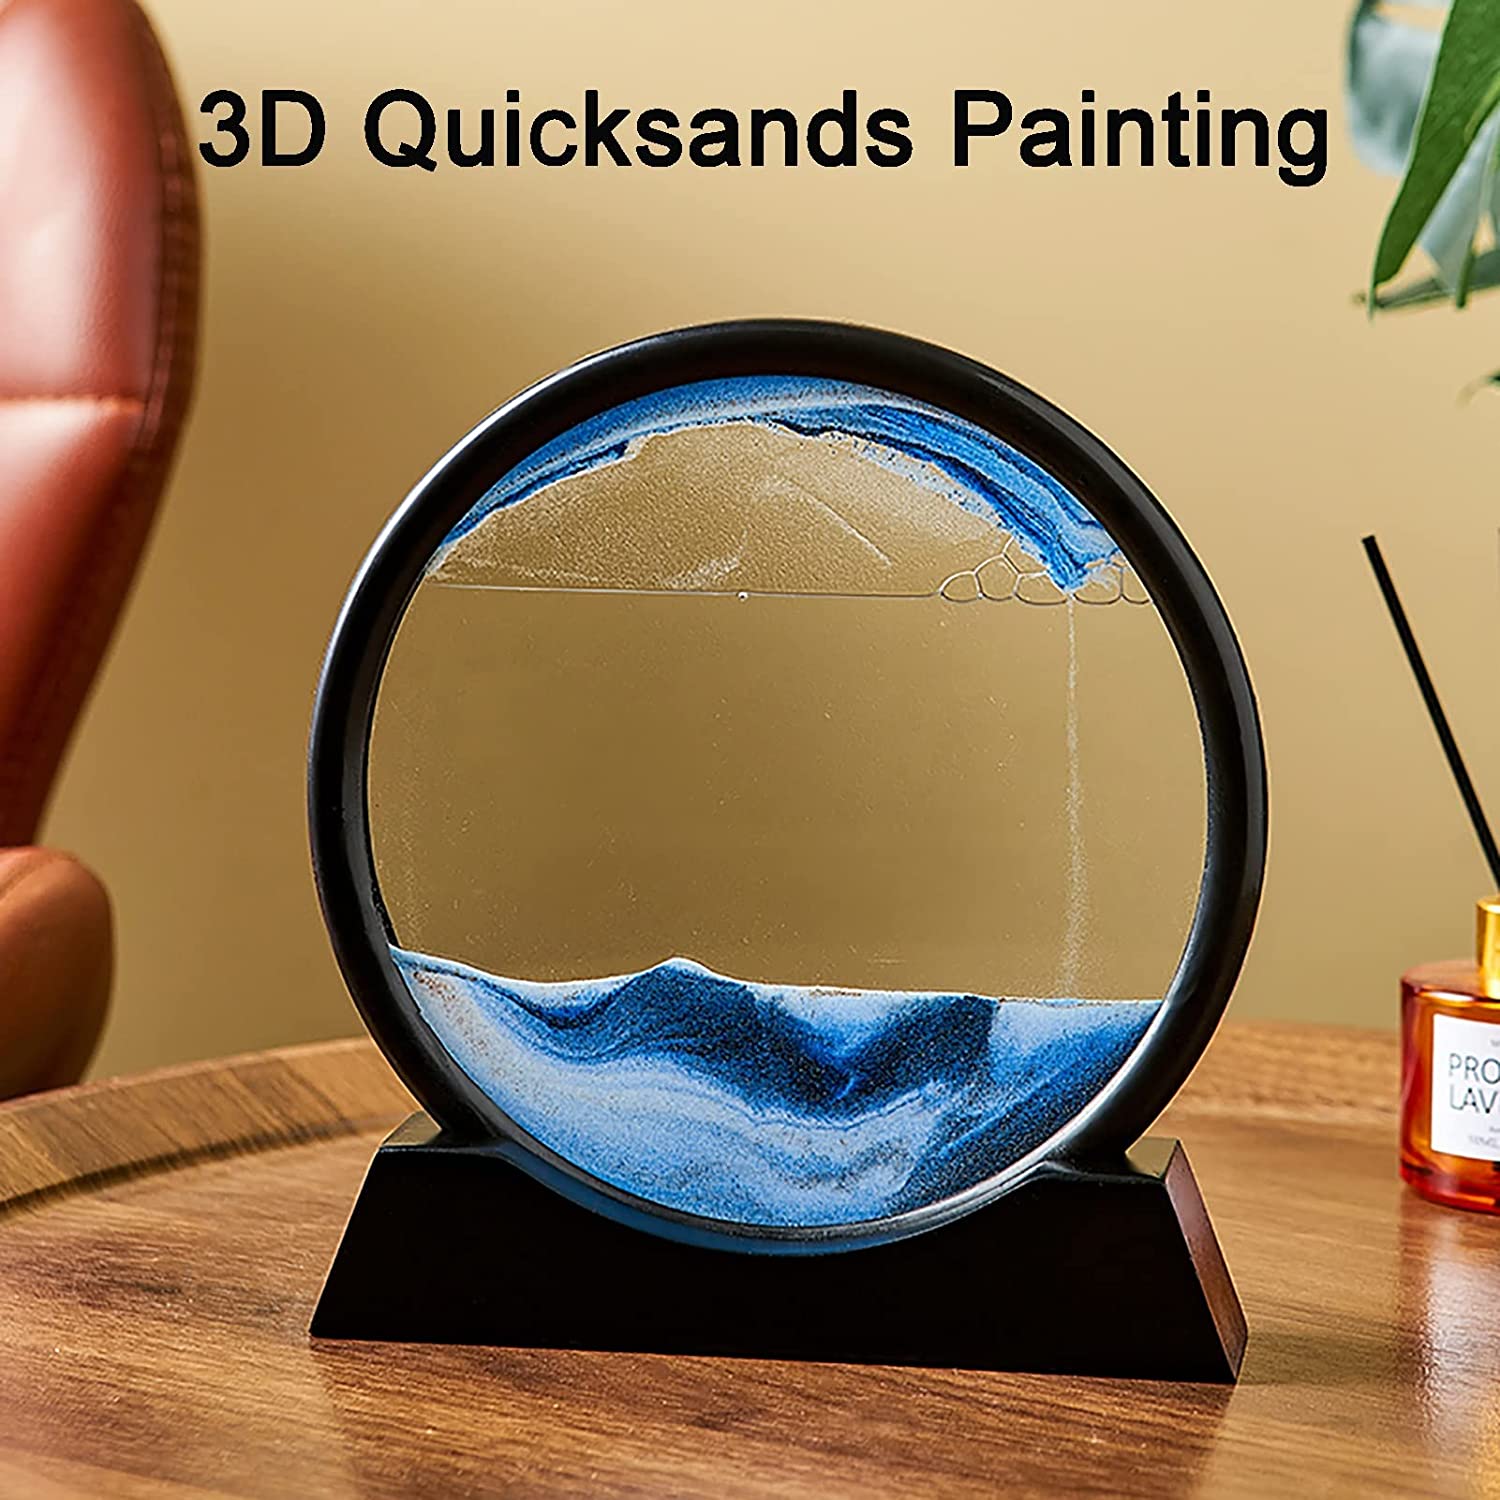 3D Dynamic Quicksand - Modern style artistic sense, decorative home accessories